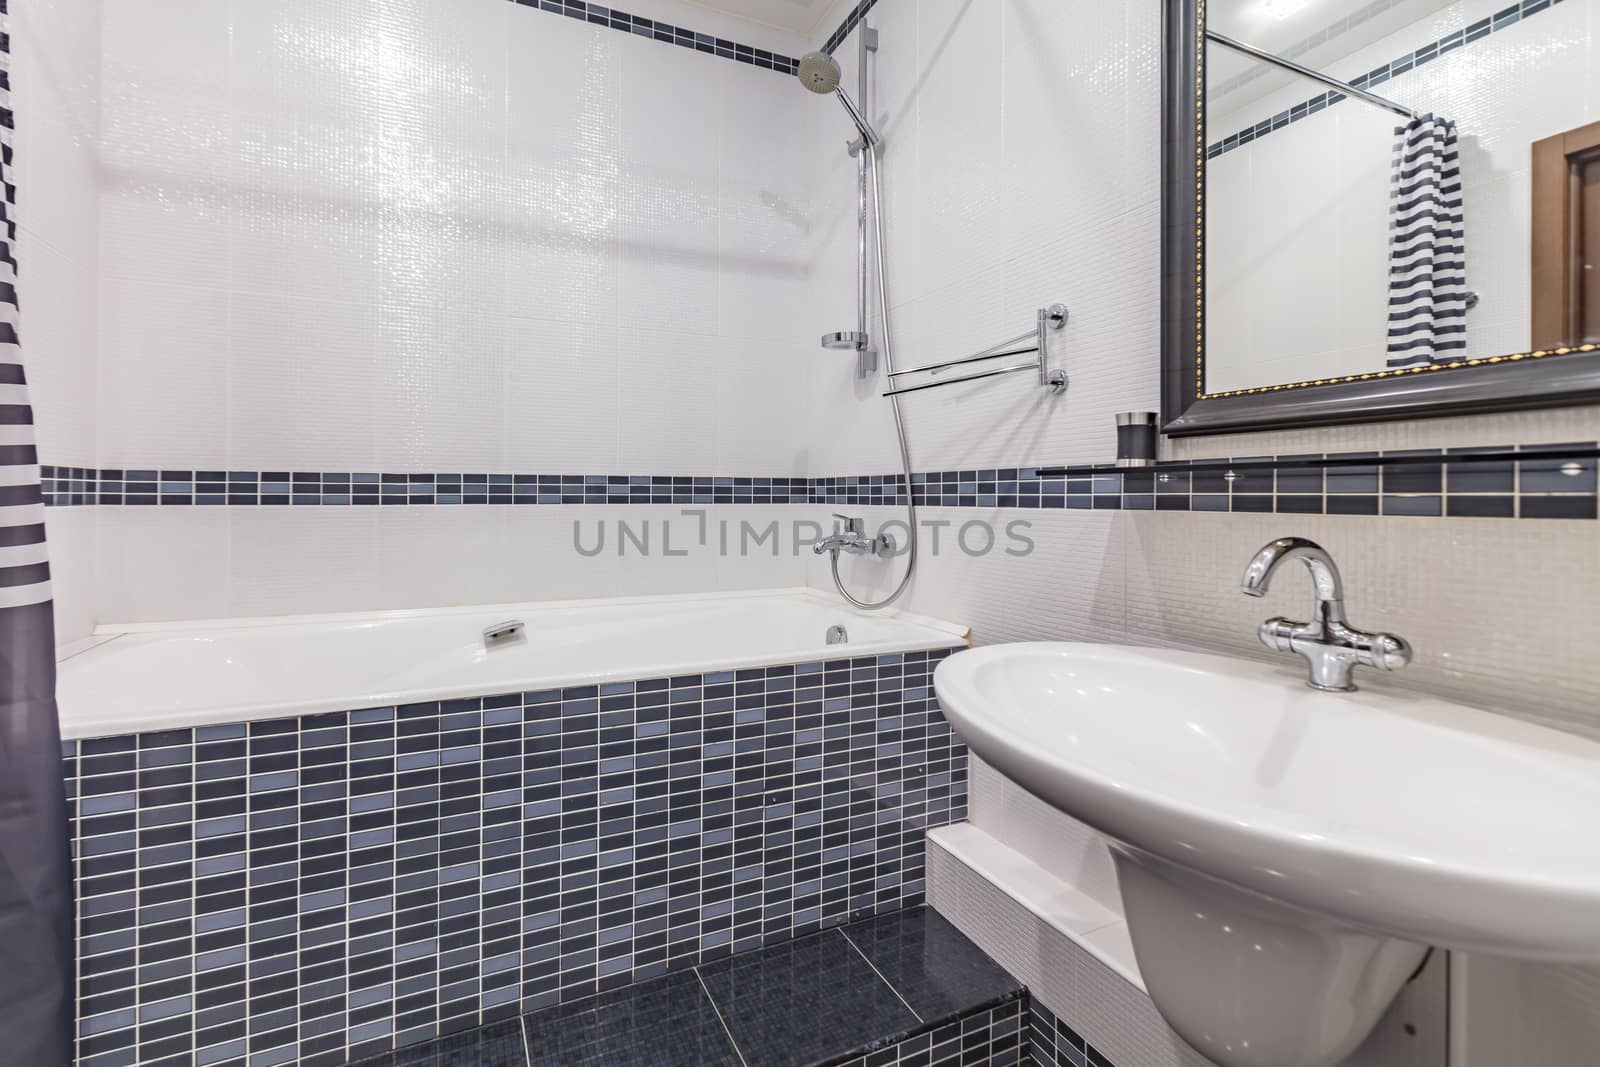 Small grey tile bathroom with bath tube and sink